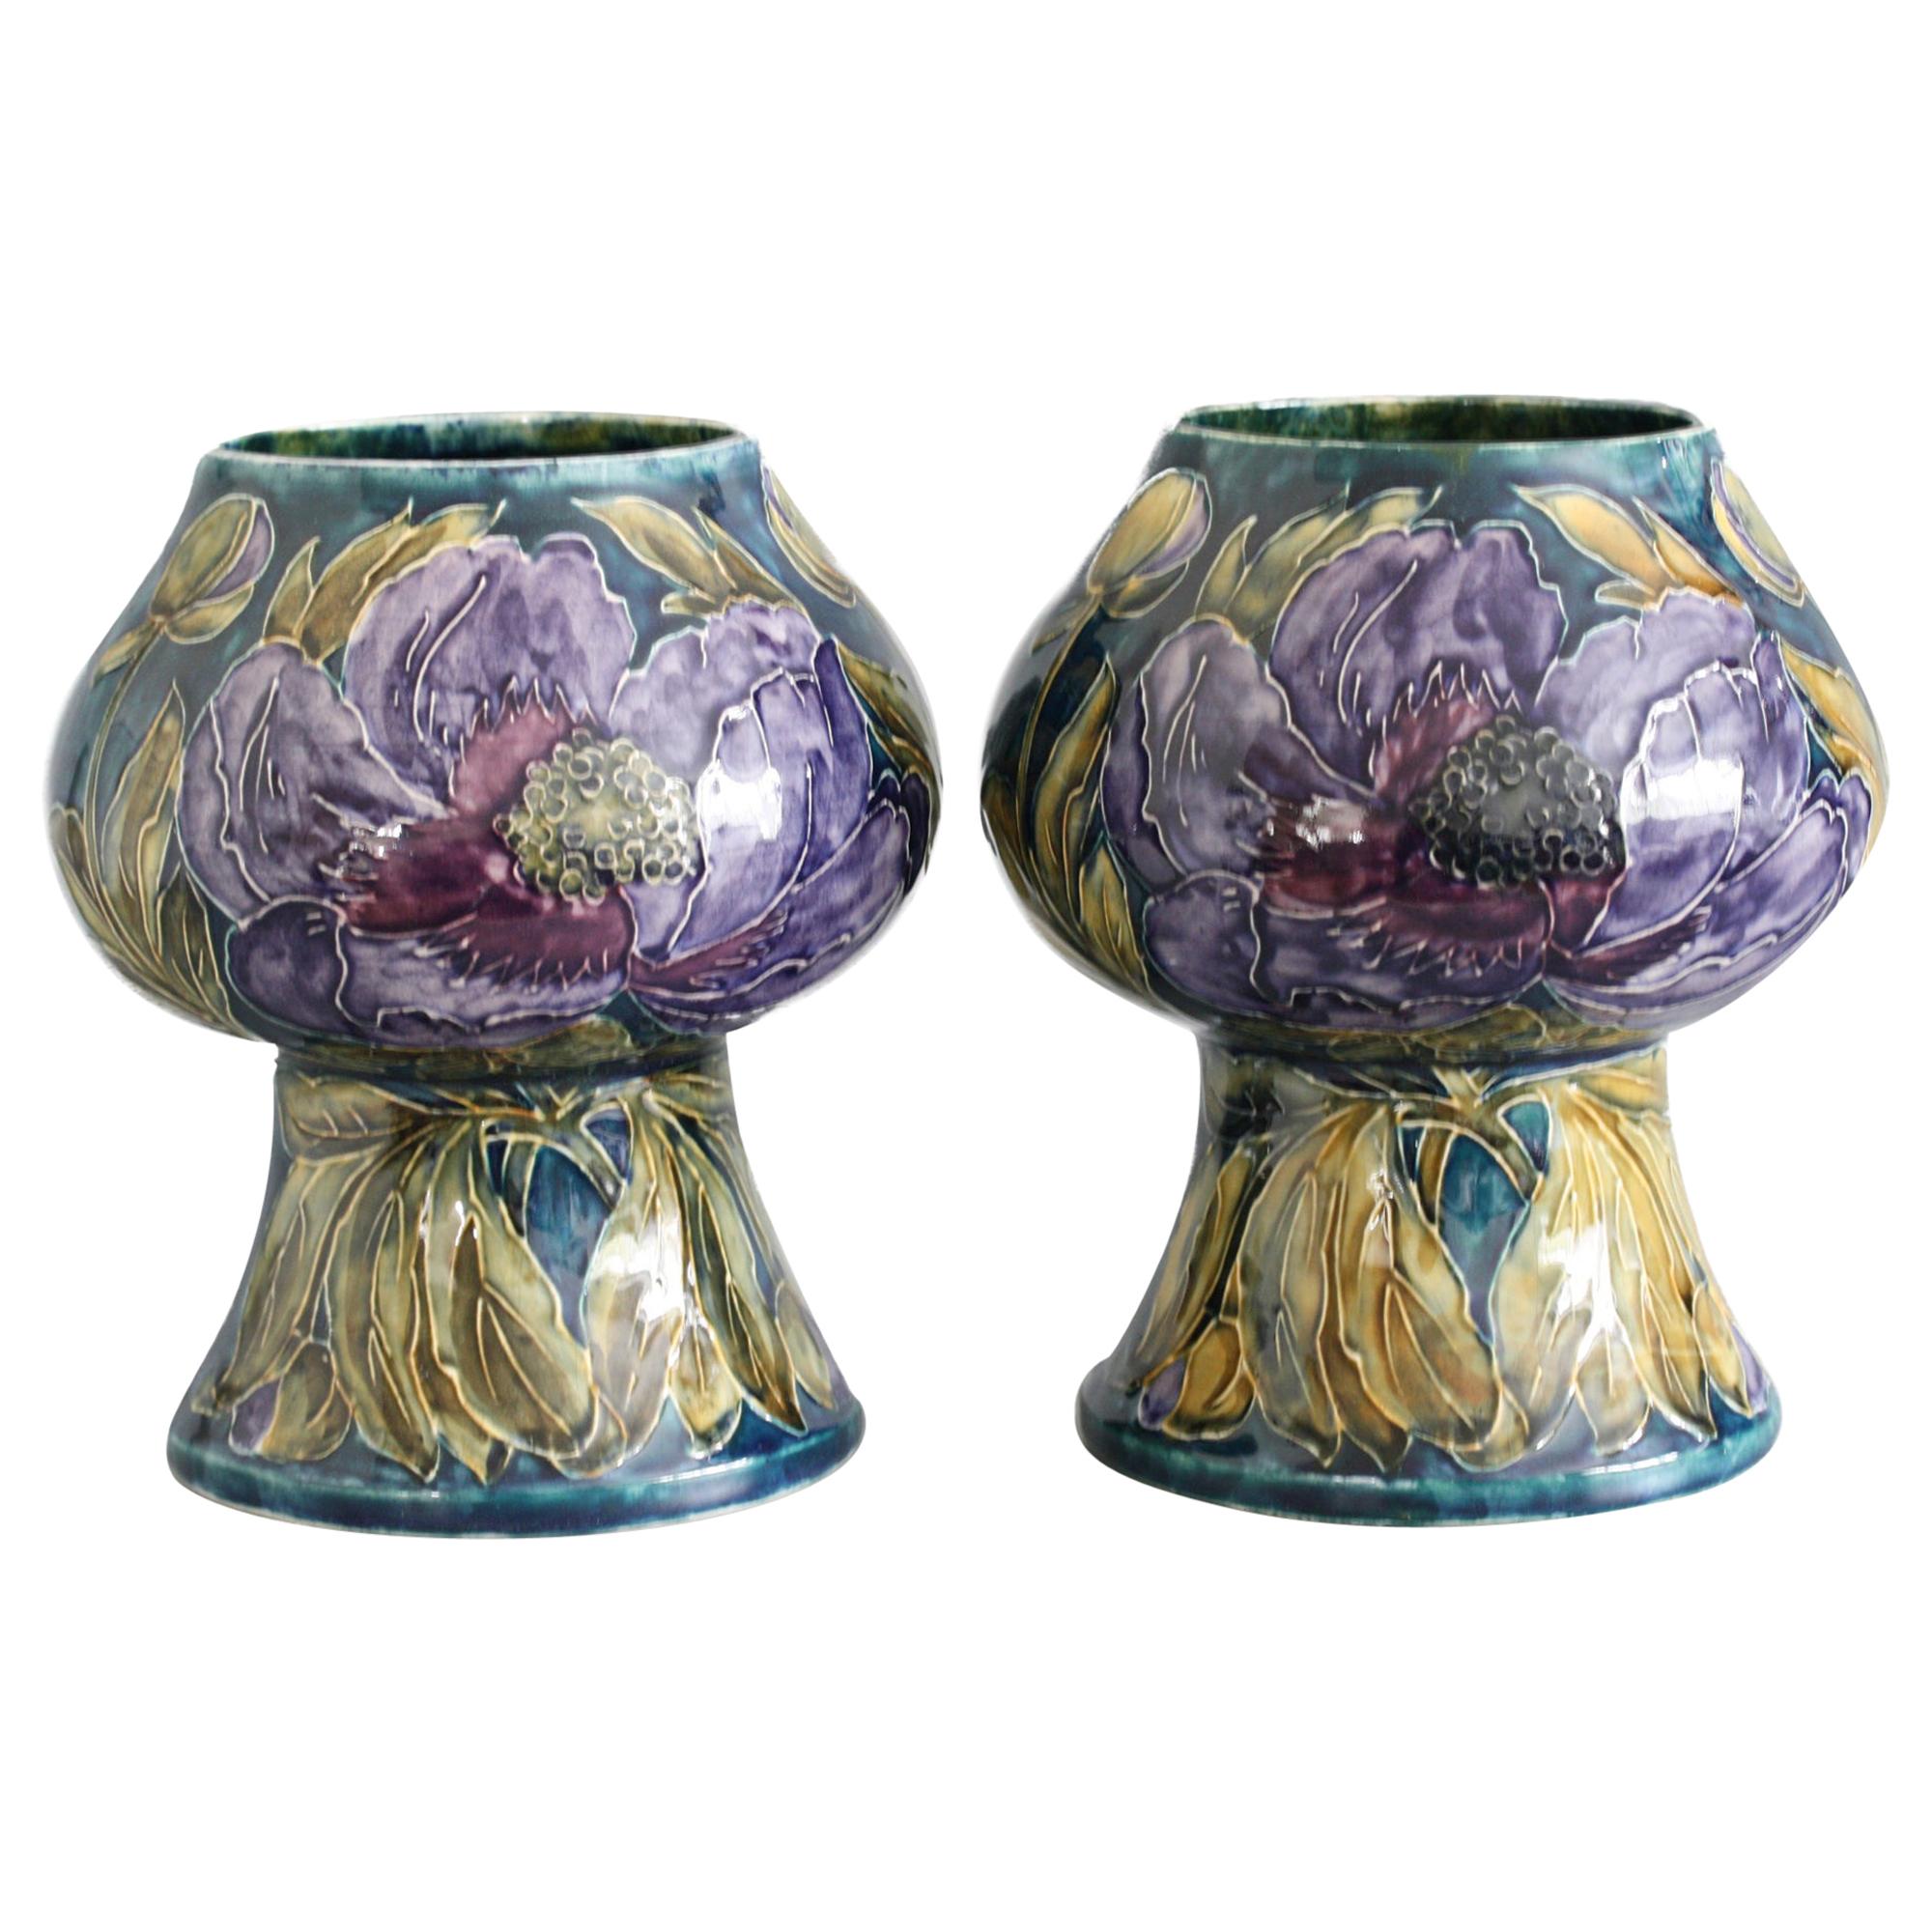 George Cartlidge Pair of Hancock Morris Ware Art Deco Vases Painted with Poppies